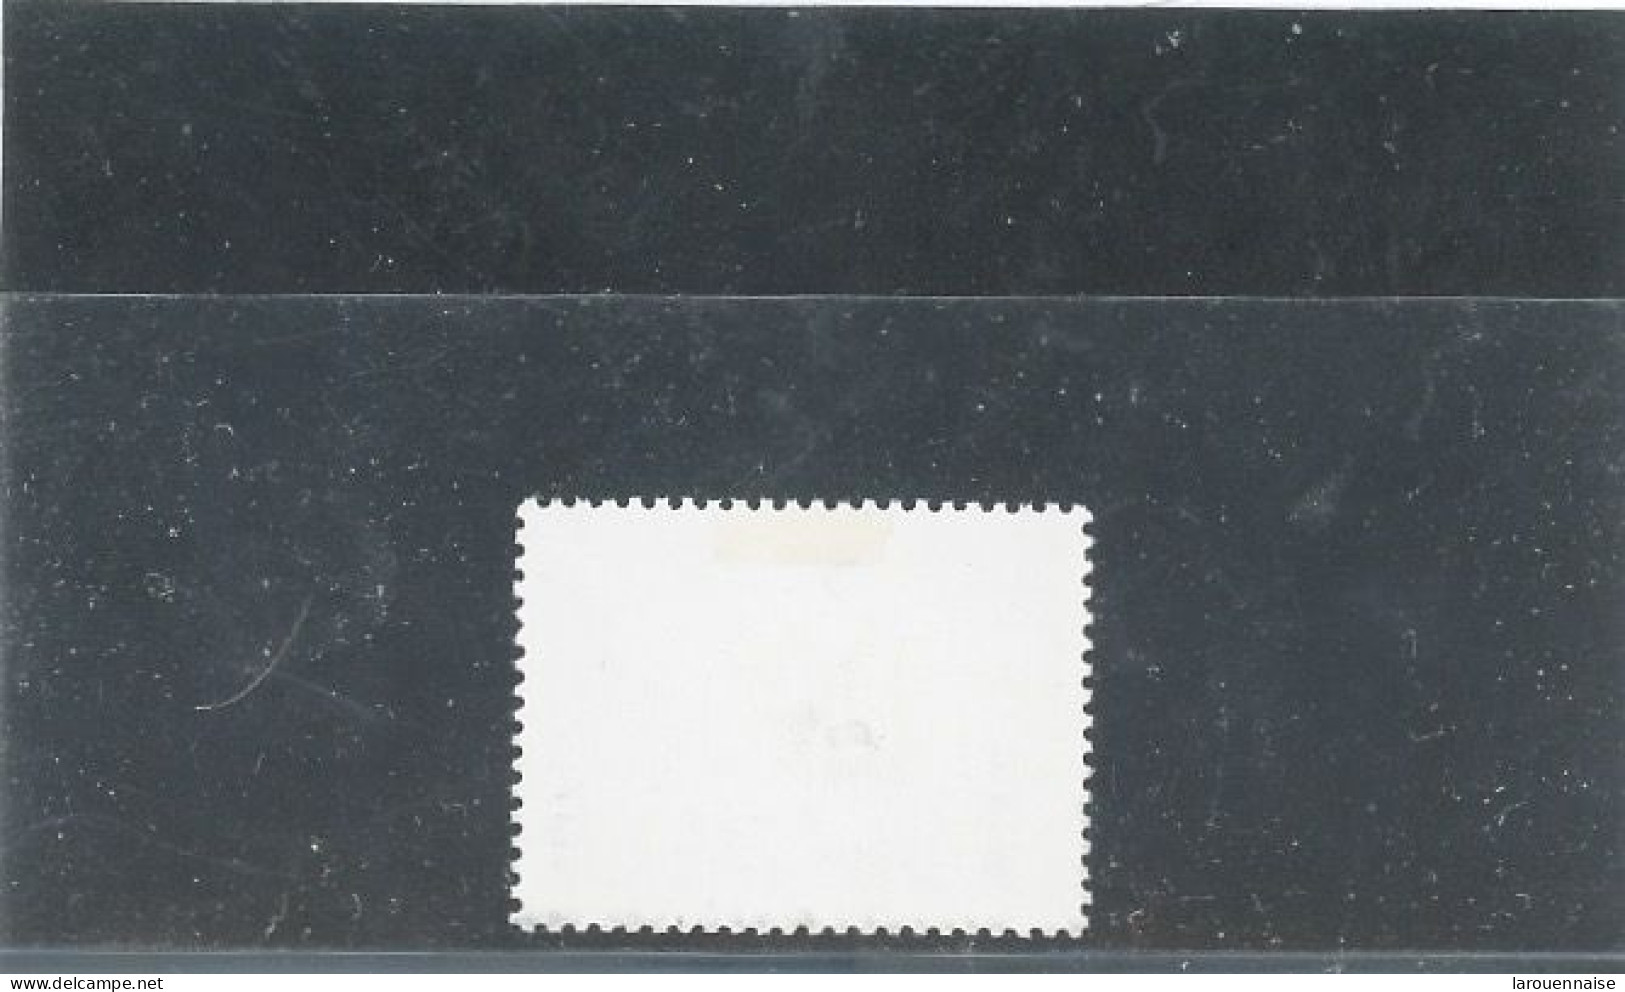 CHINE - N° (Y EtT) 1618 /1625 N*- LEGER PELURAGE AU DOS DU 4 C _ SOFT PEELING ON 4c BACK - Unused Stamps